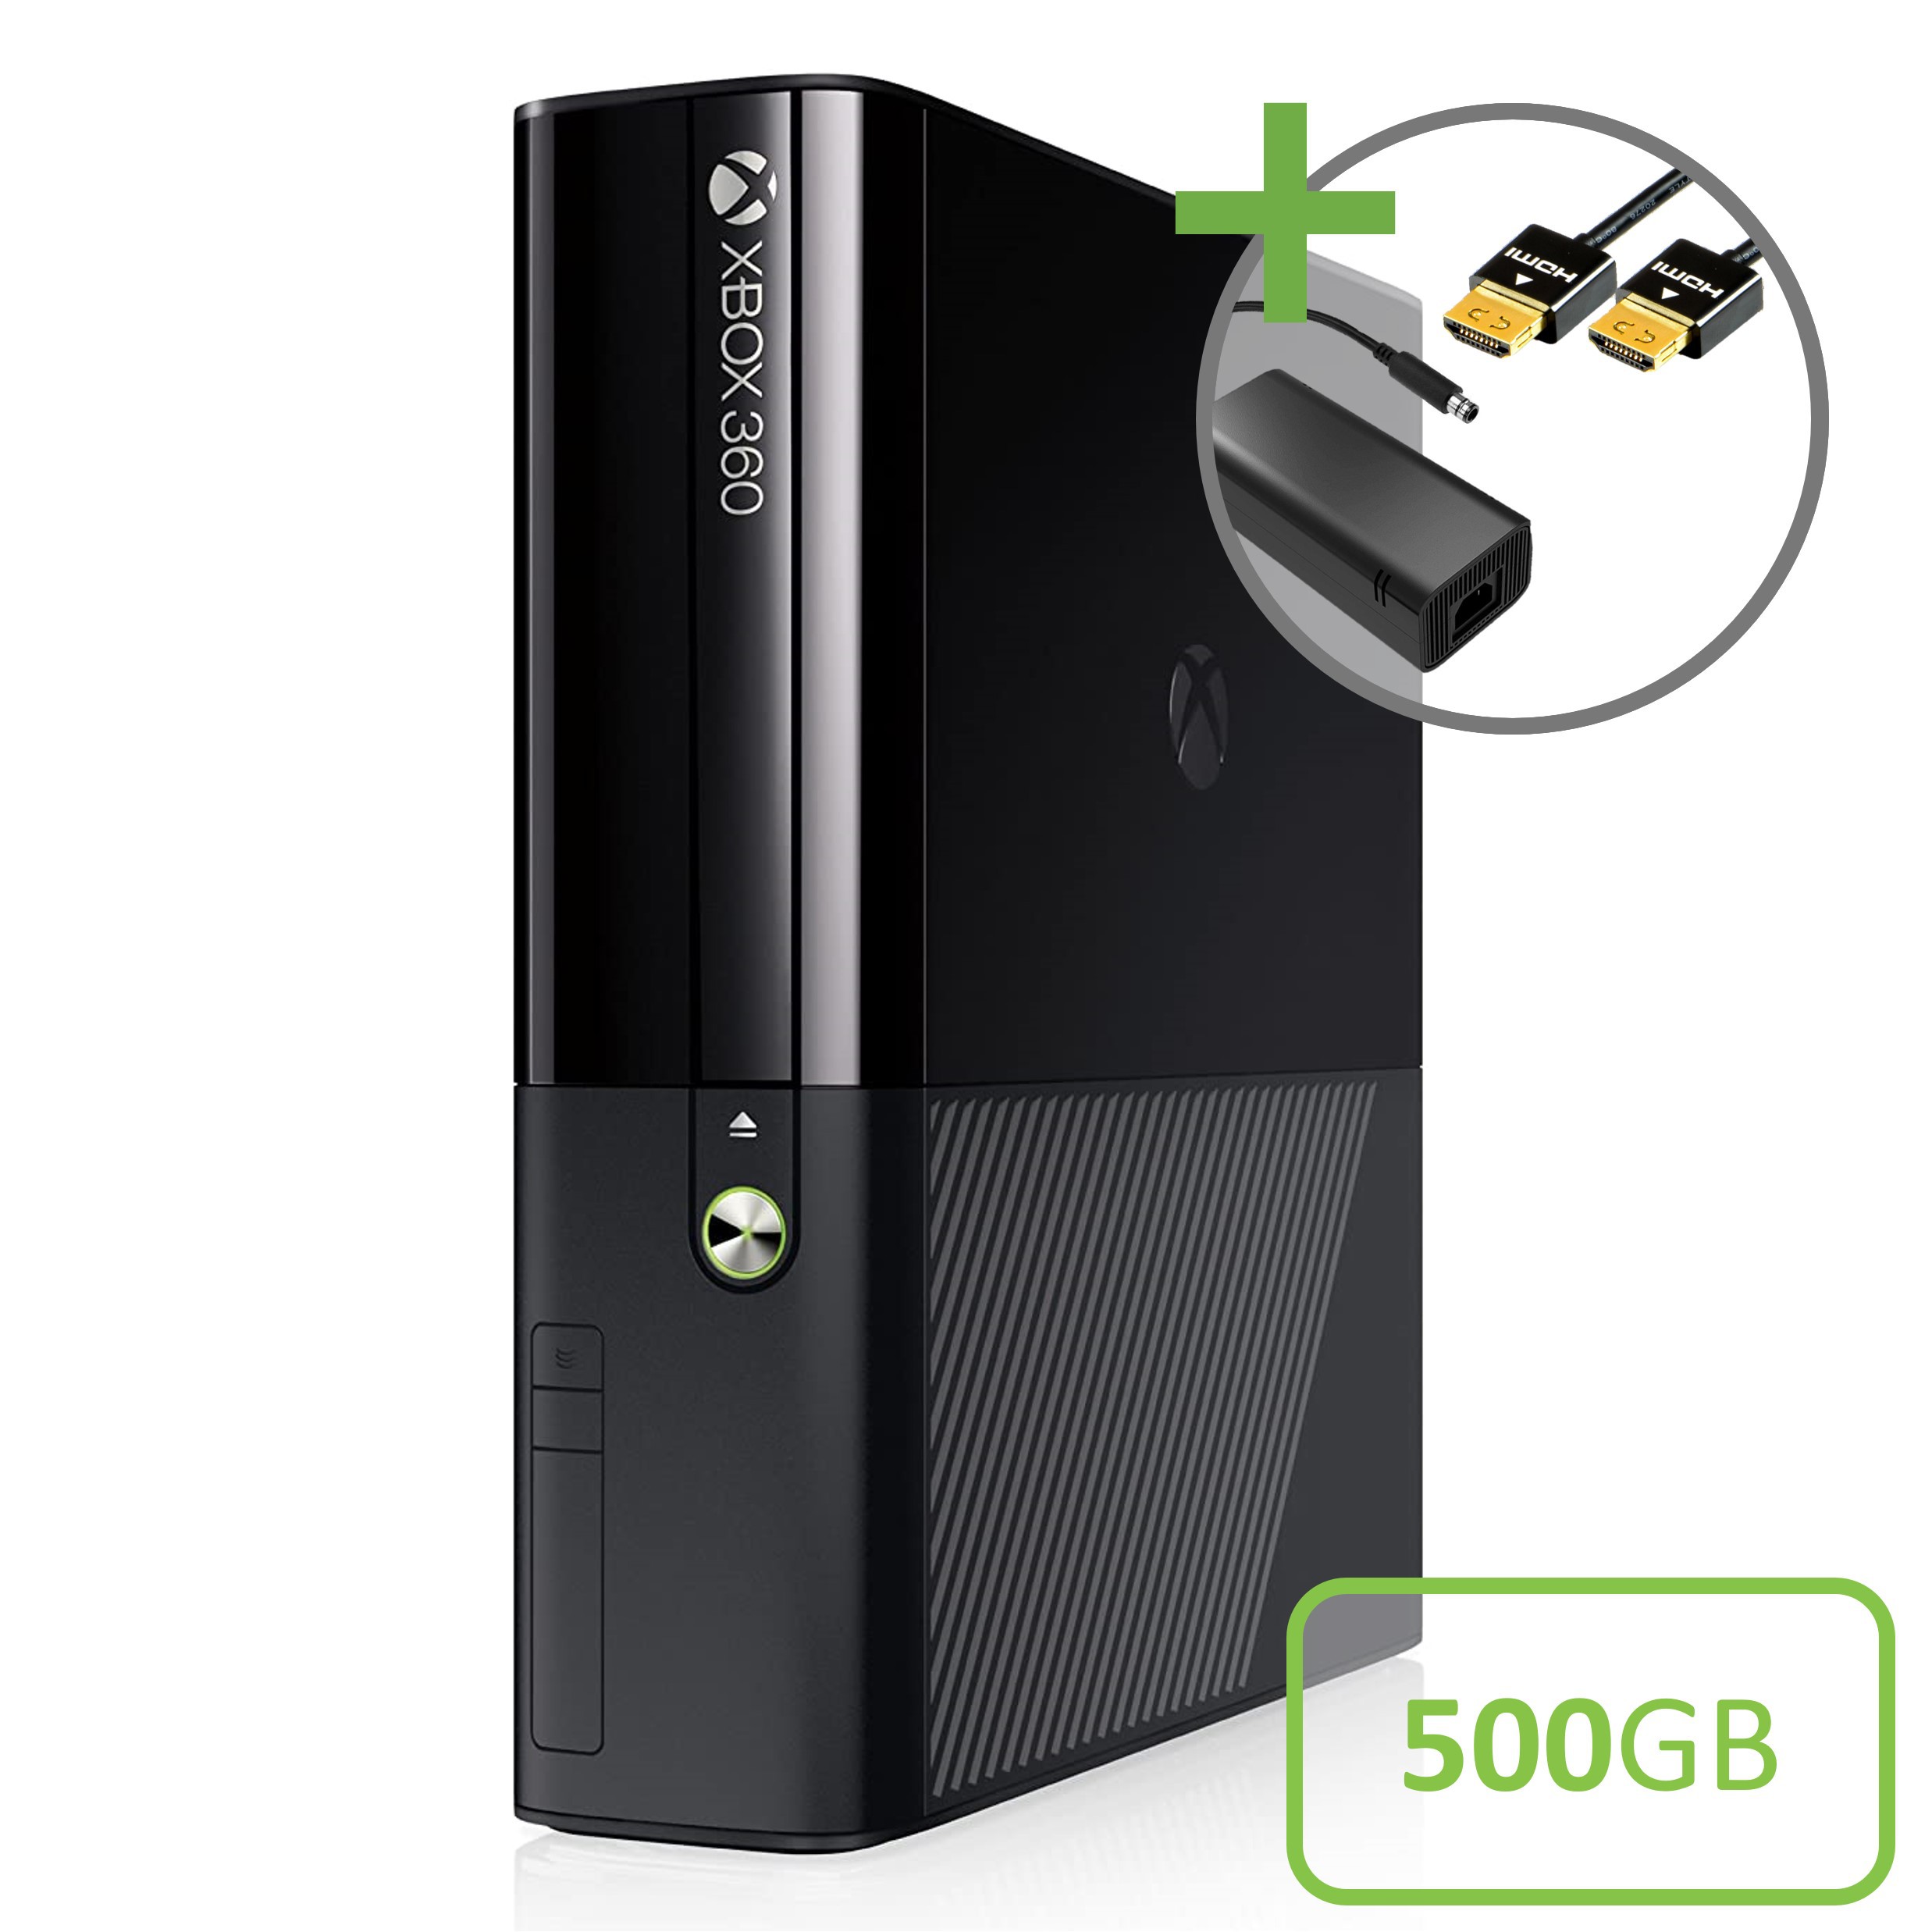 Microsoft Xbox 360 New Slim Console (500GB) - Xbox 360 Hardware